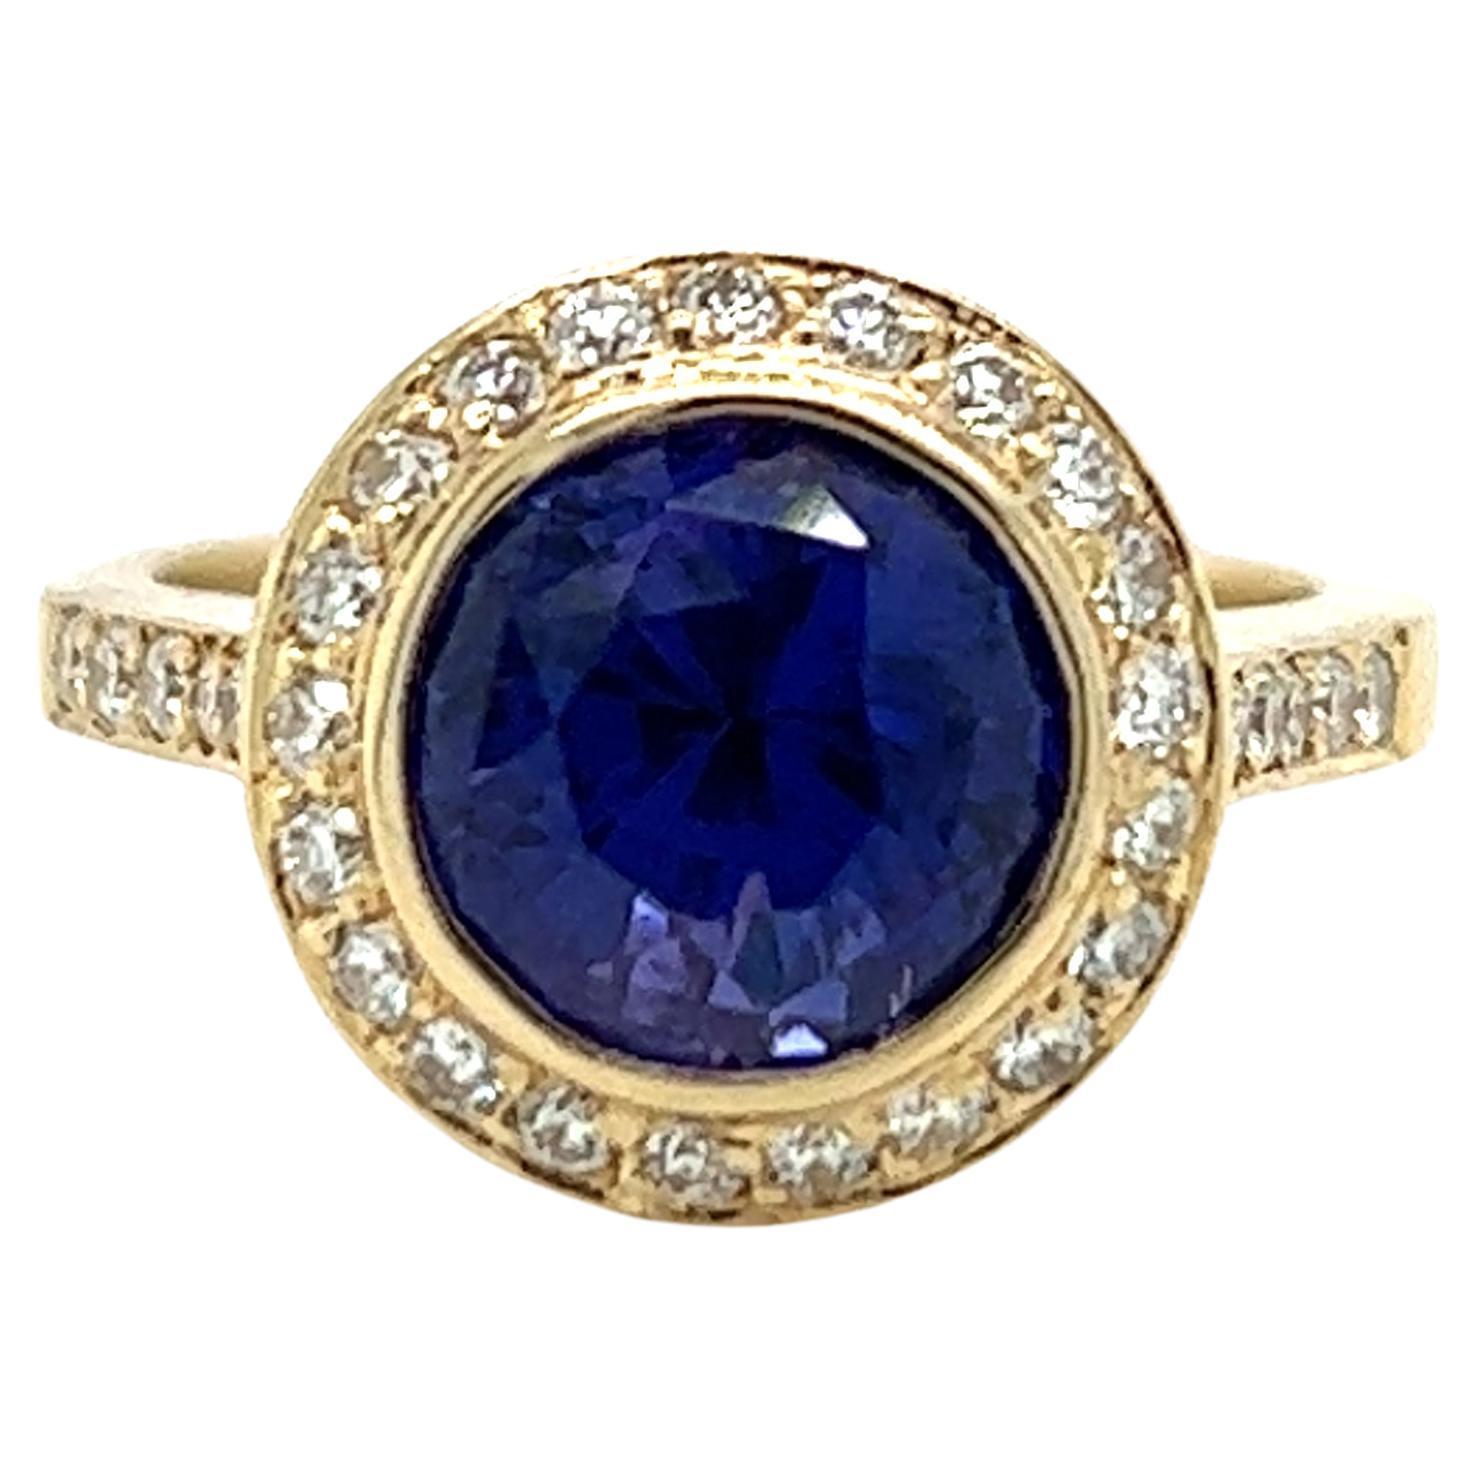 3.23 Carat Unheated Blue/Purple Sapphire & Diamond Halo Ring in 14K Yellow Gold 